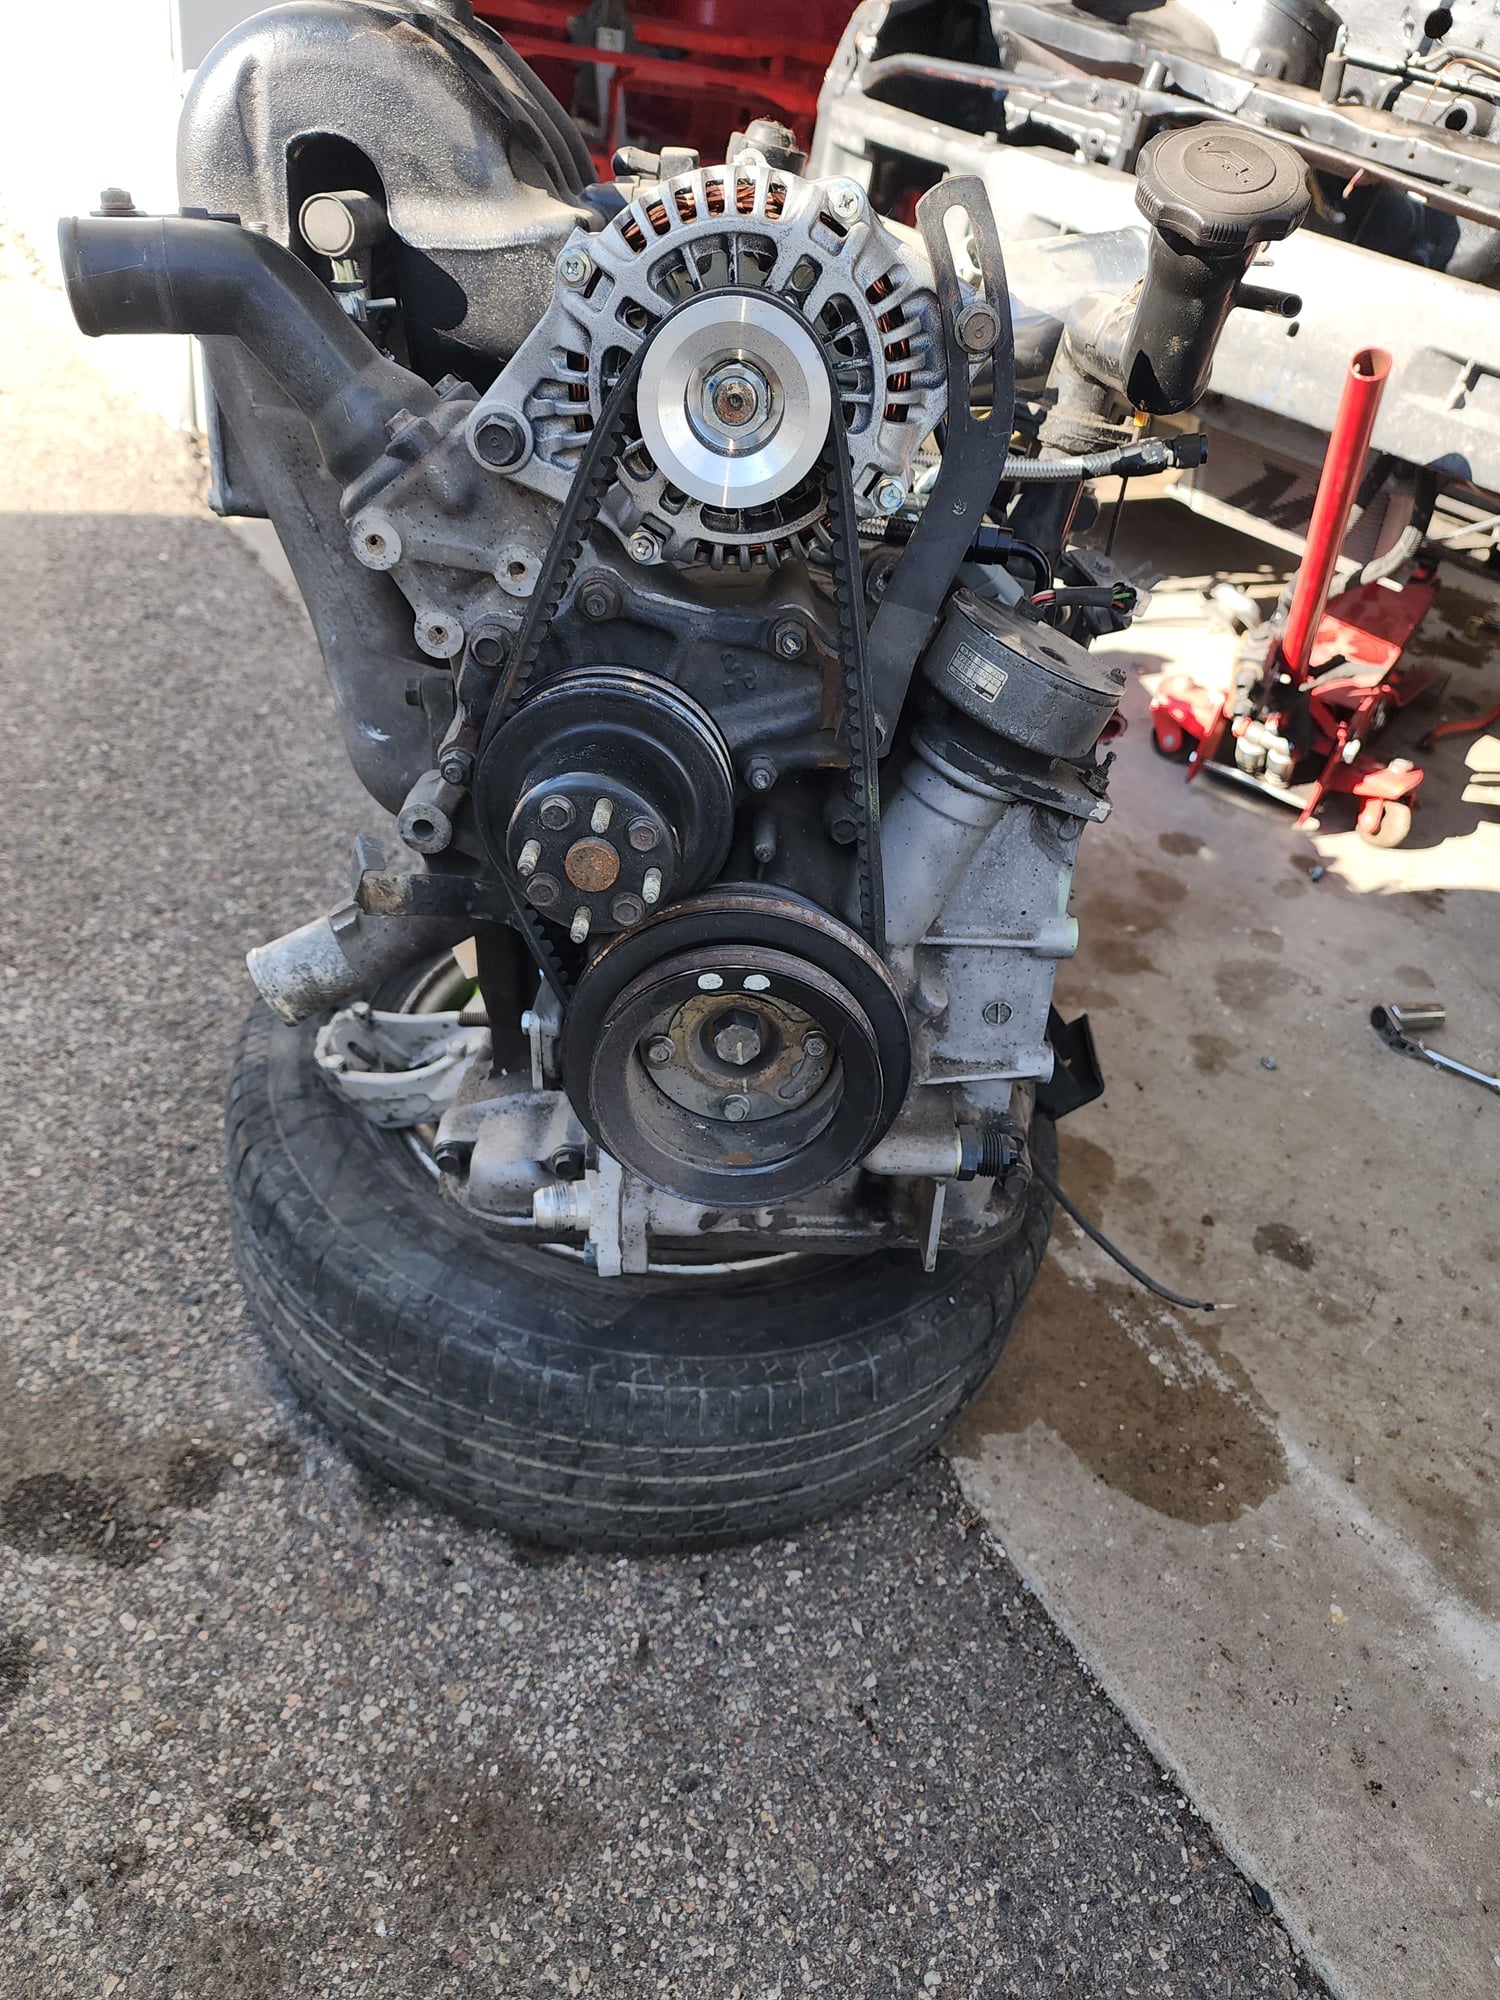 Engine - Complete - S5 turbo engine new rebuild - Used - Brigham City, UT 84302, United States